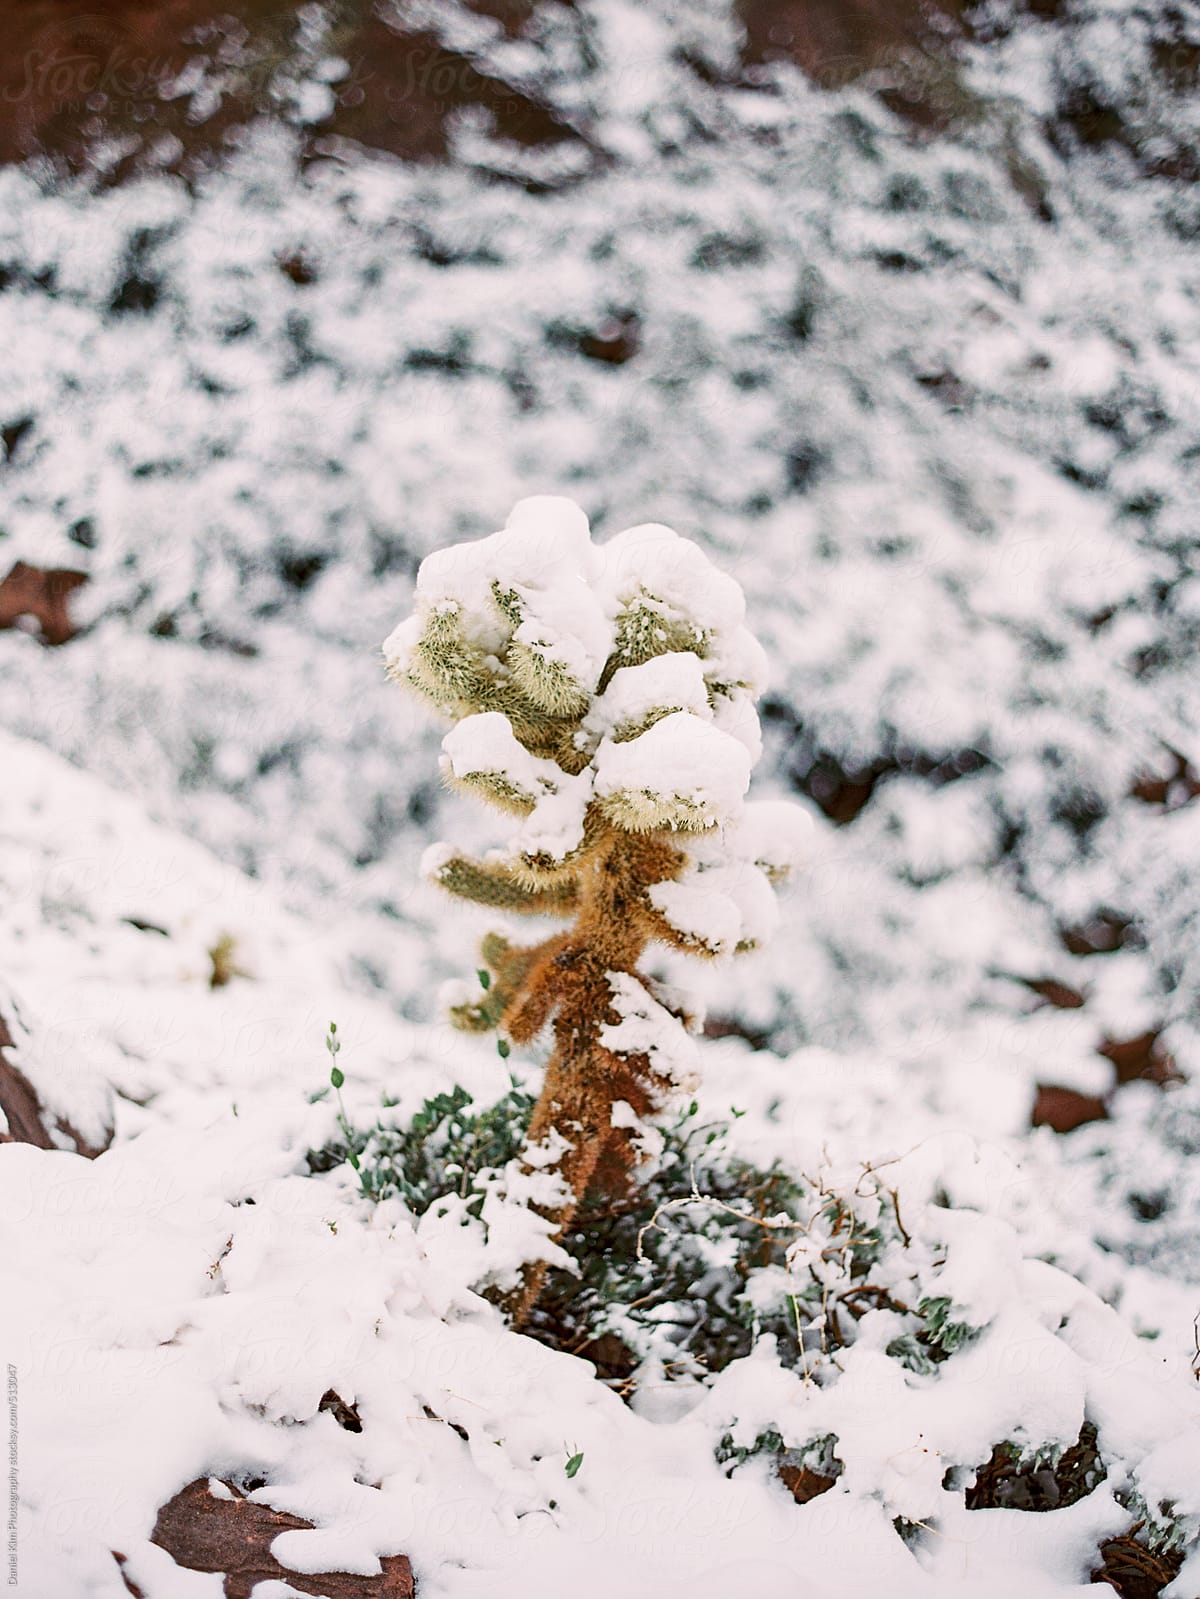 Snow covered cactus